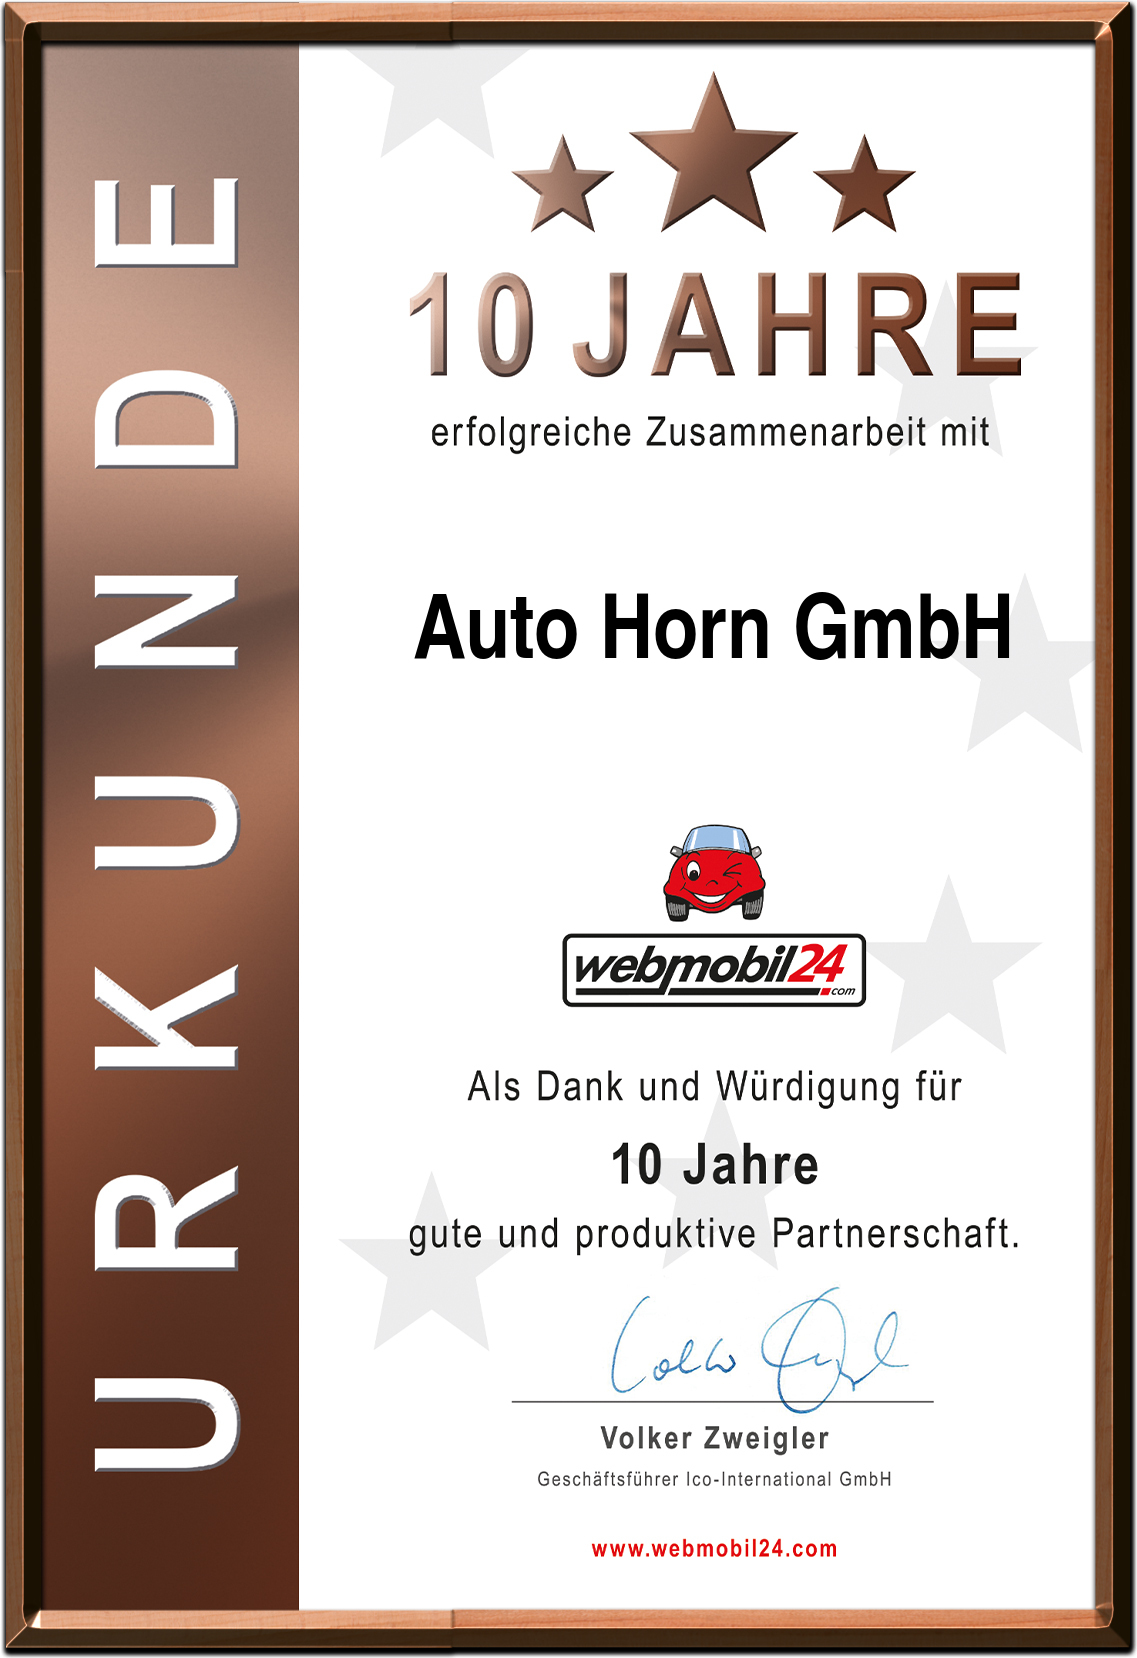 Auto Horn GmbH